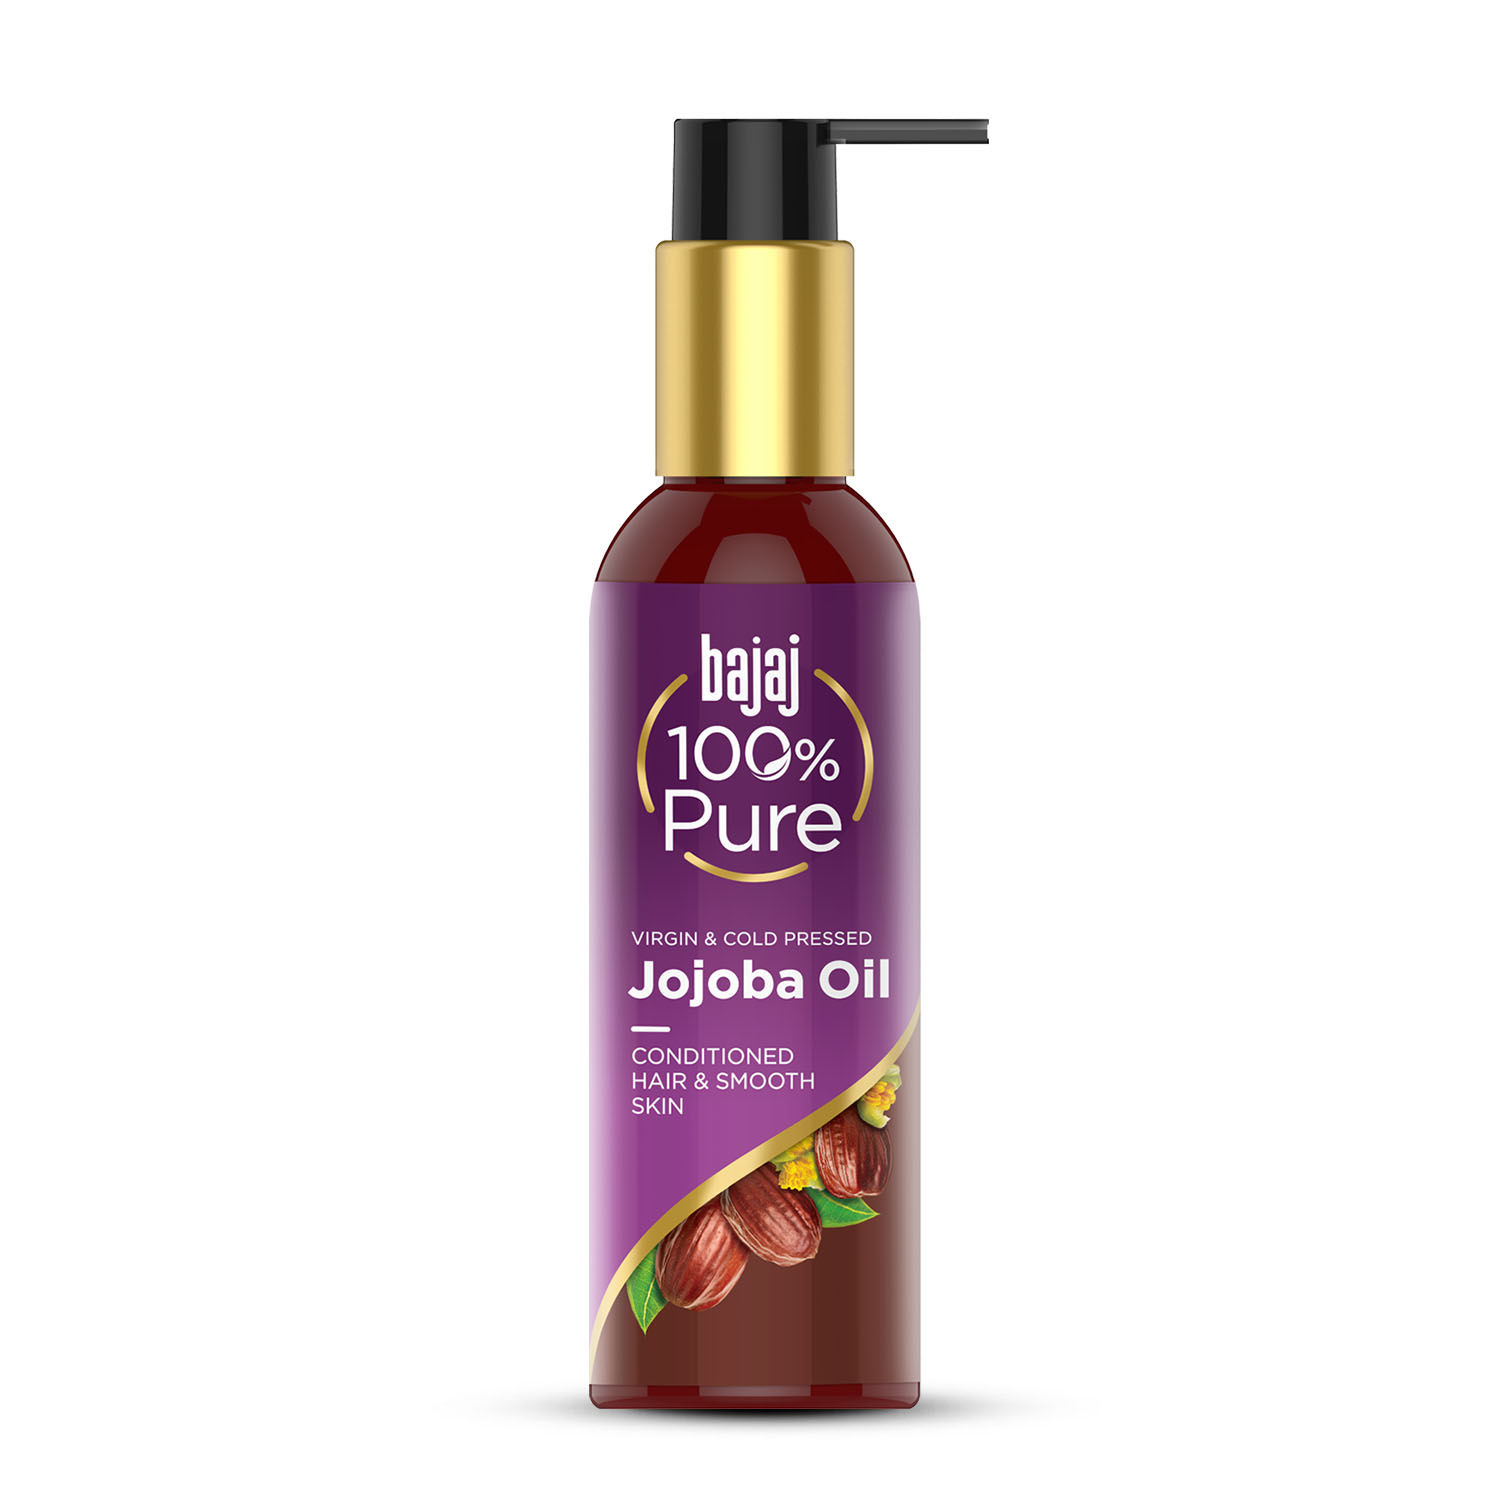 Bajaj 100% Pure Jojoba Oil Virgin & Cold Pressed Conditioned Hair & Smooth Skin